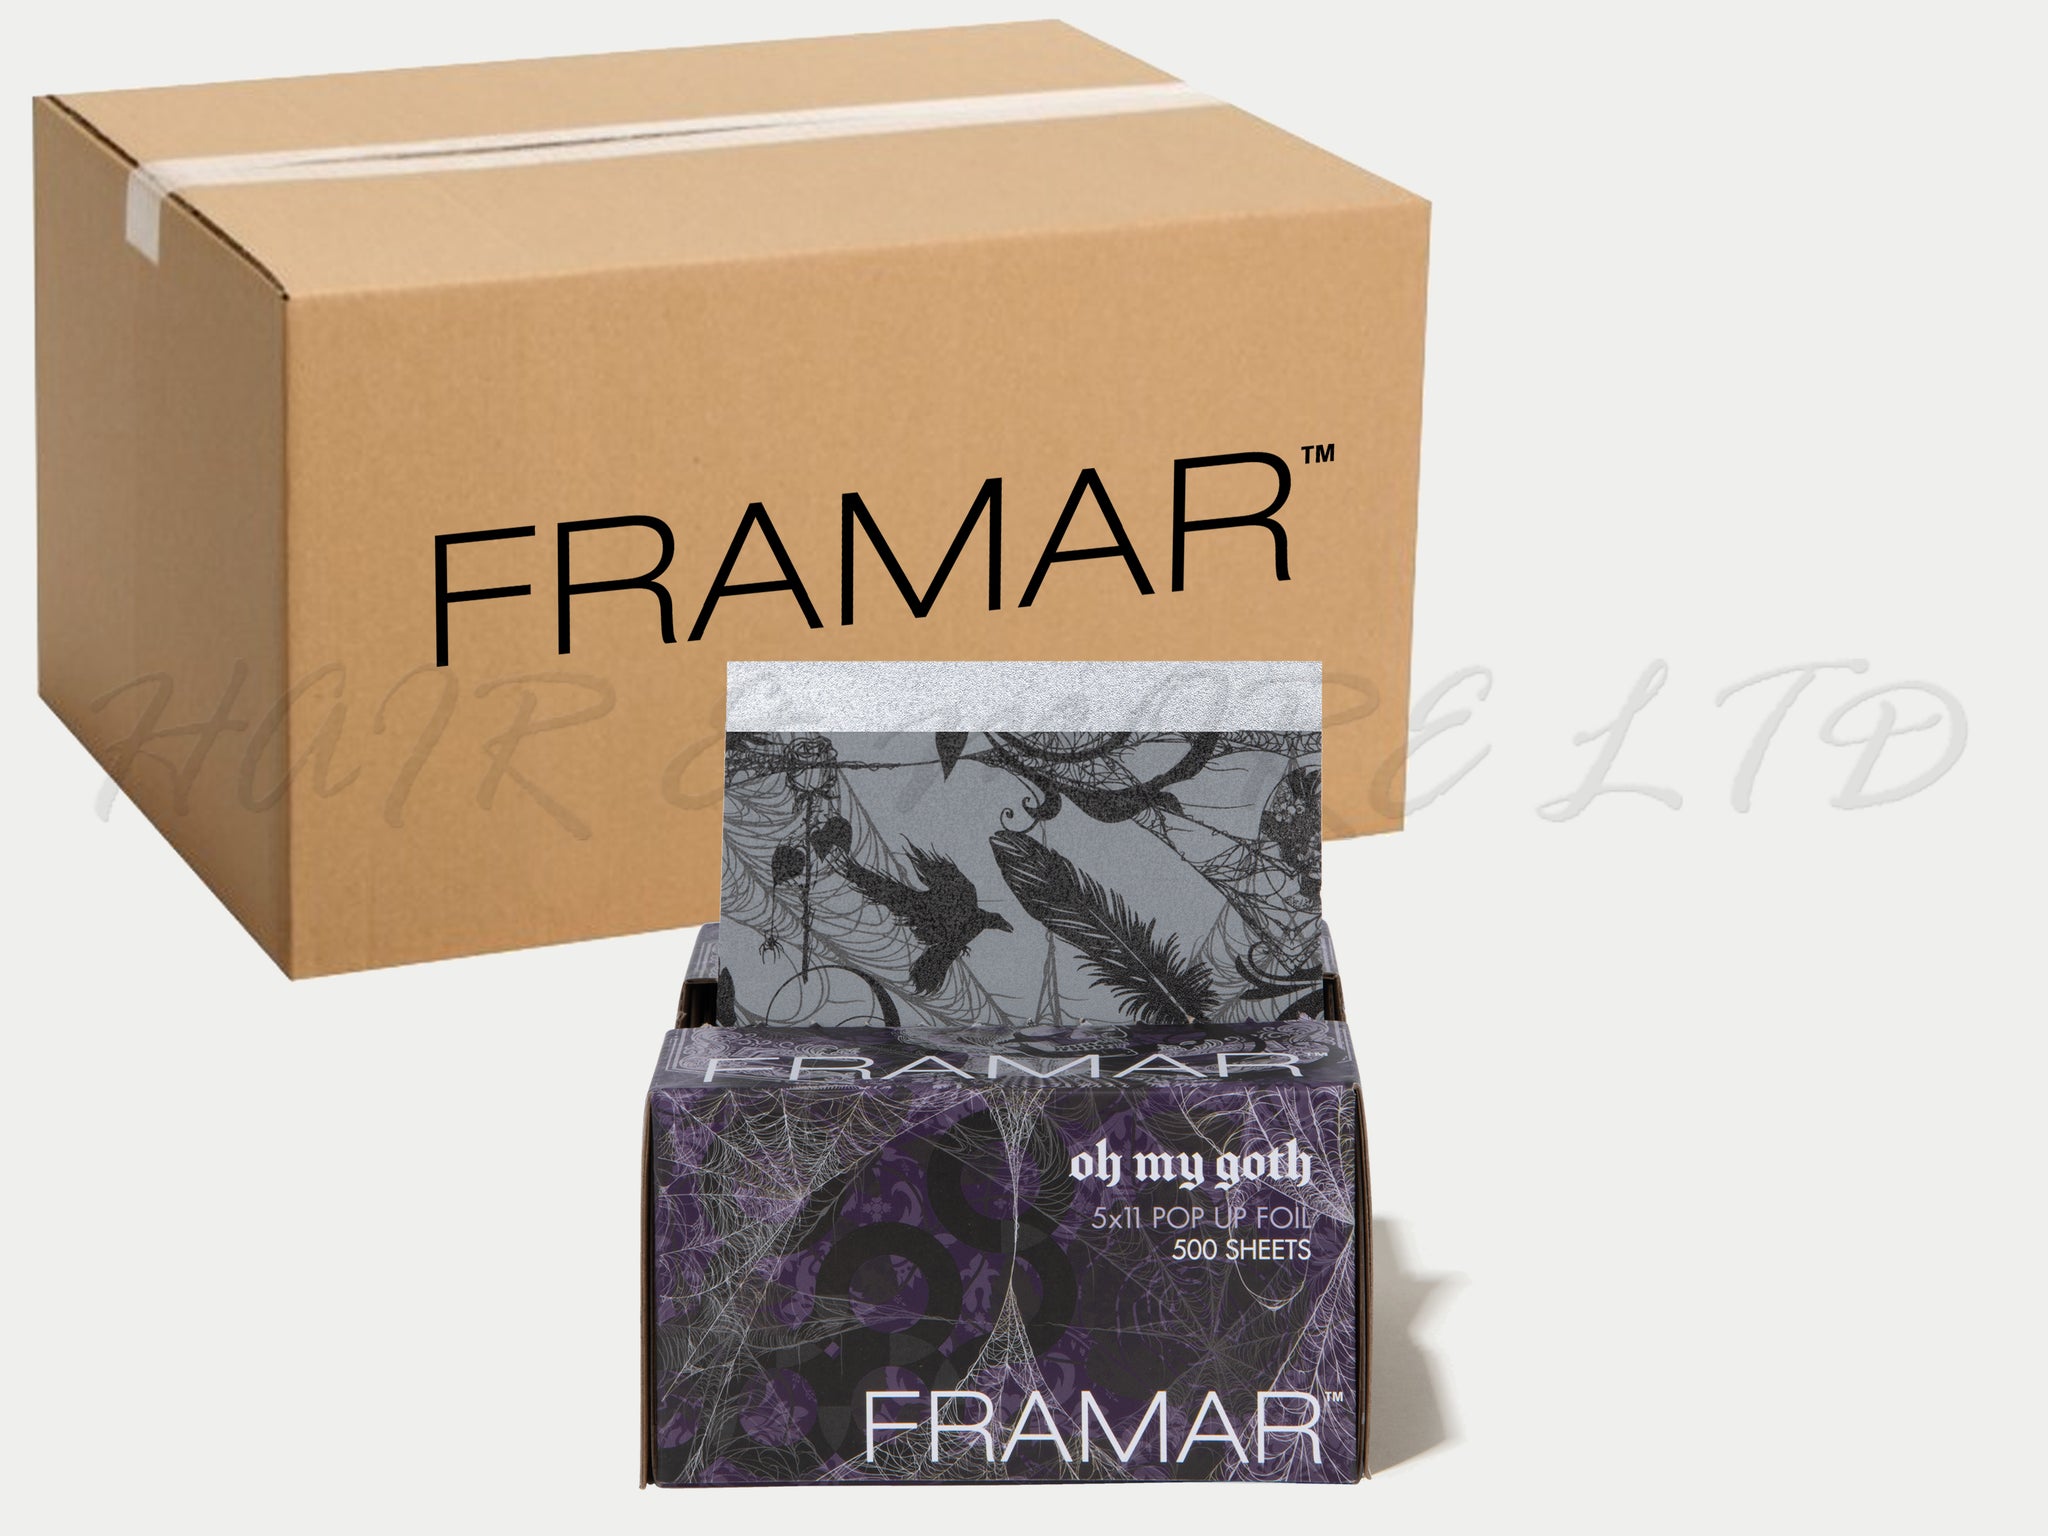 Framar Pop Up Foil 5x11 500ct